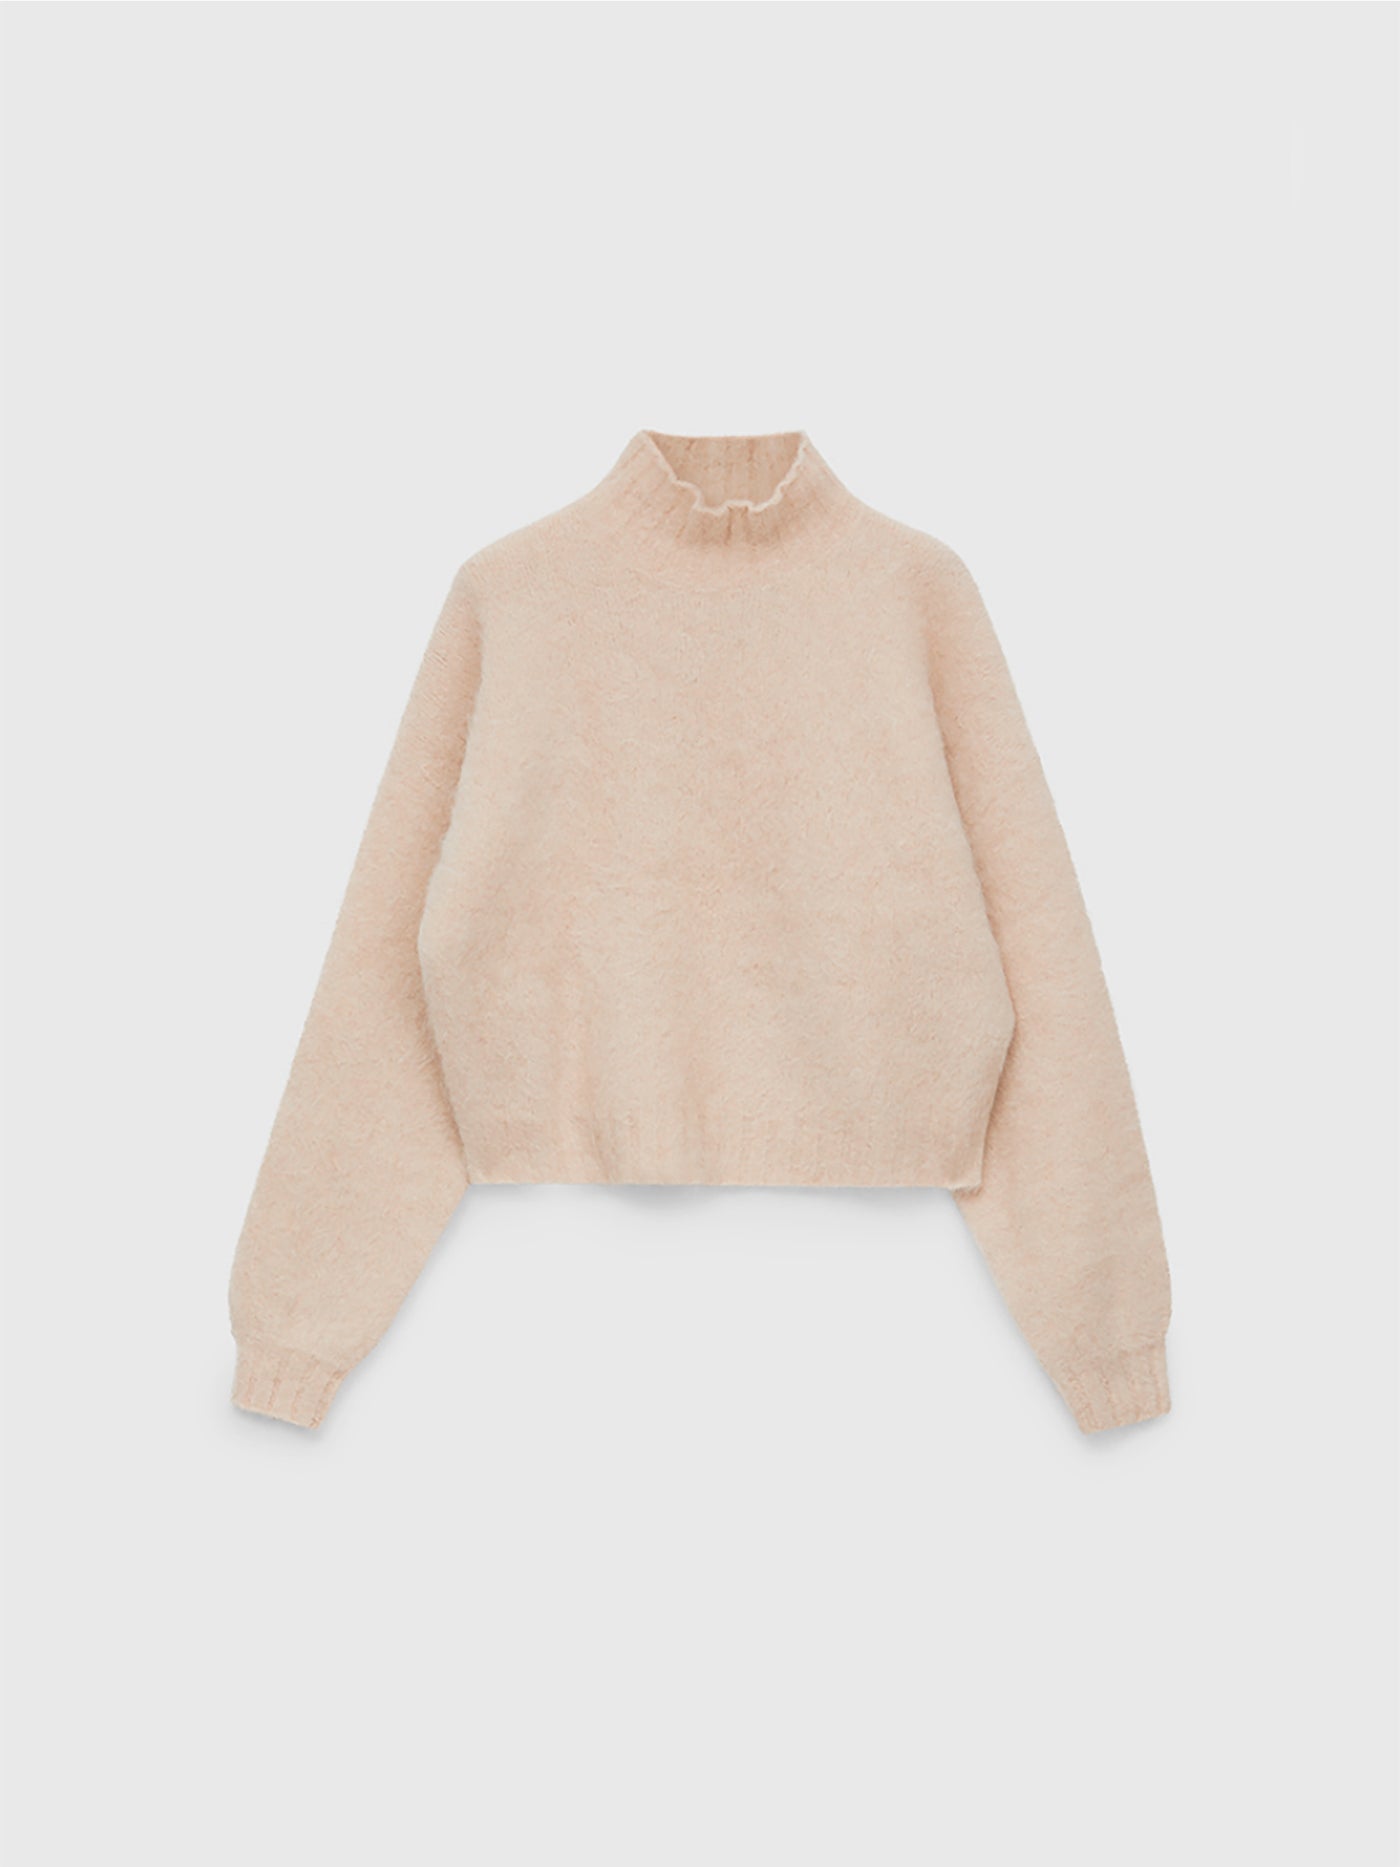 Falala sweater, beige